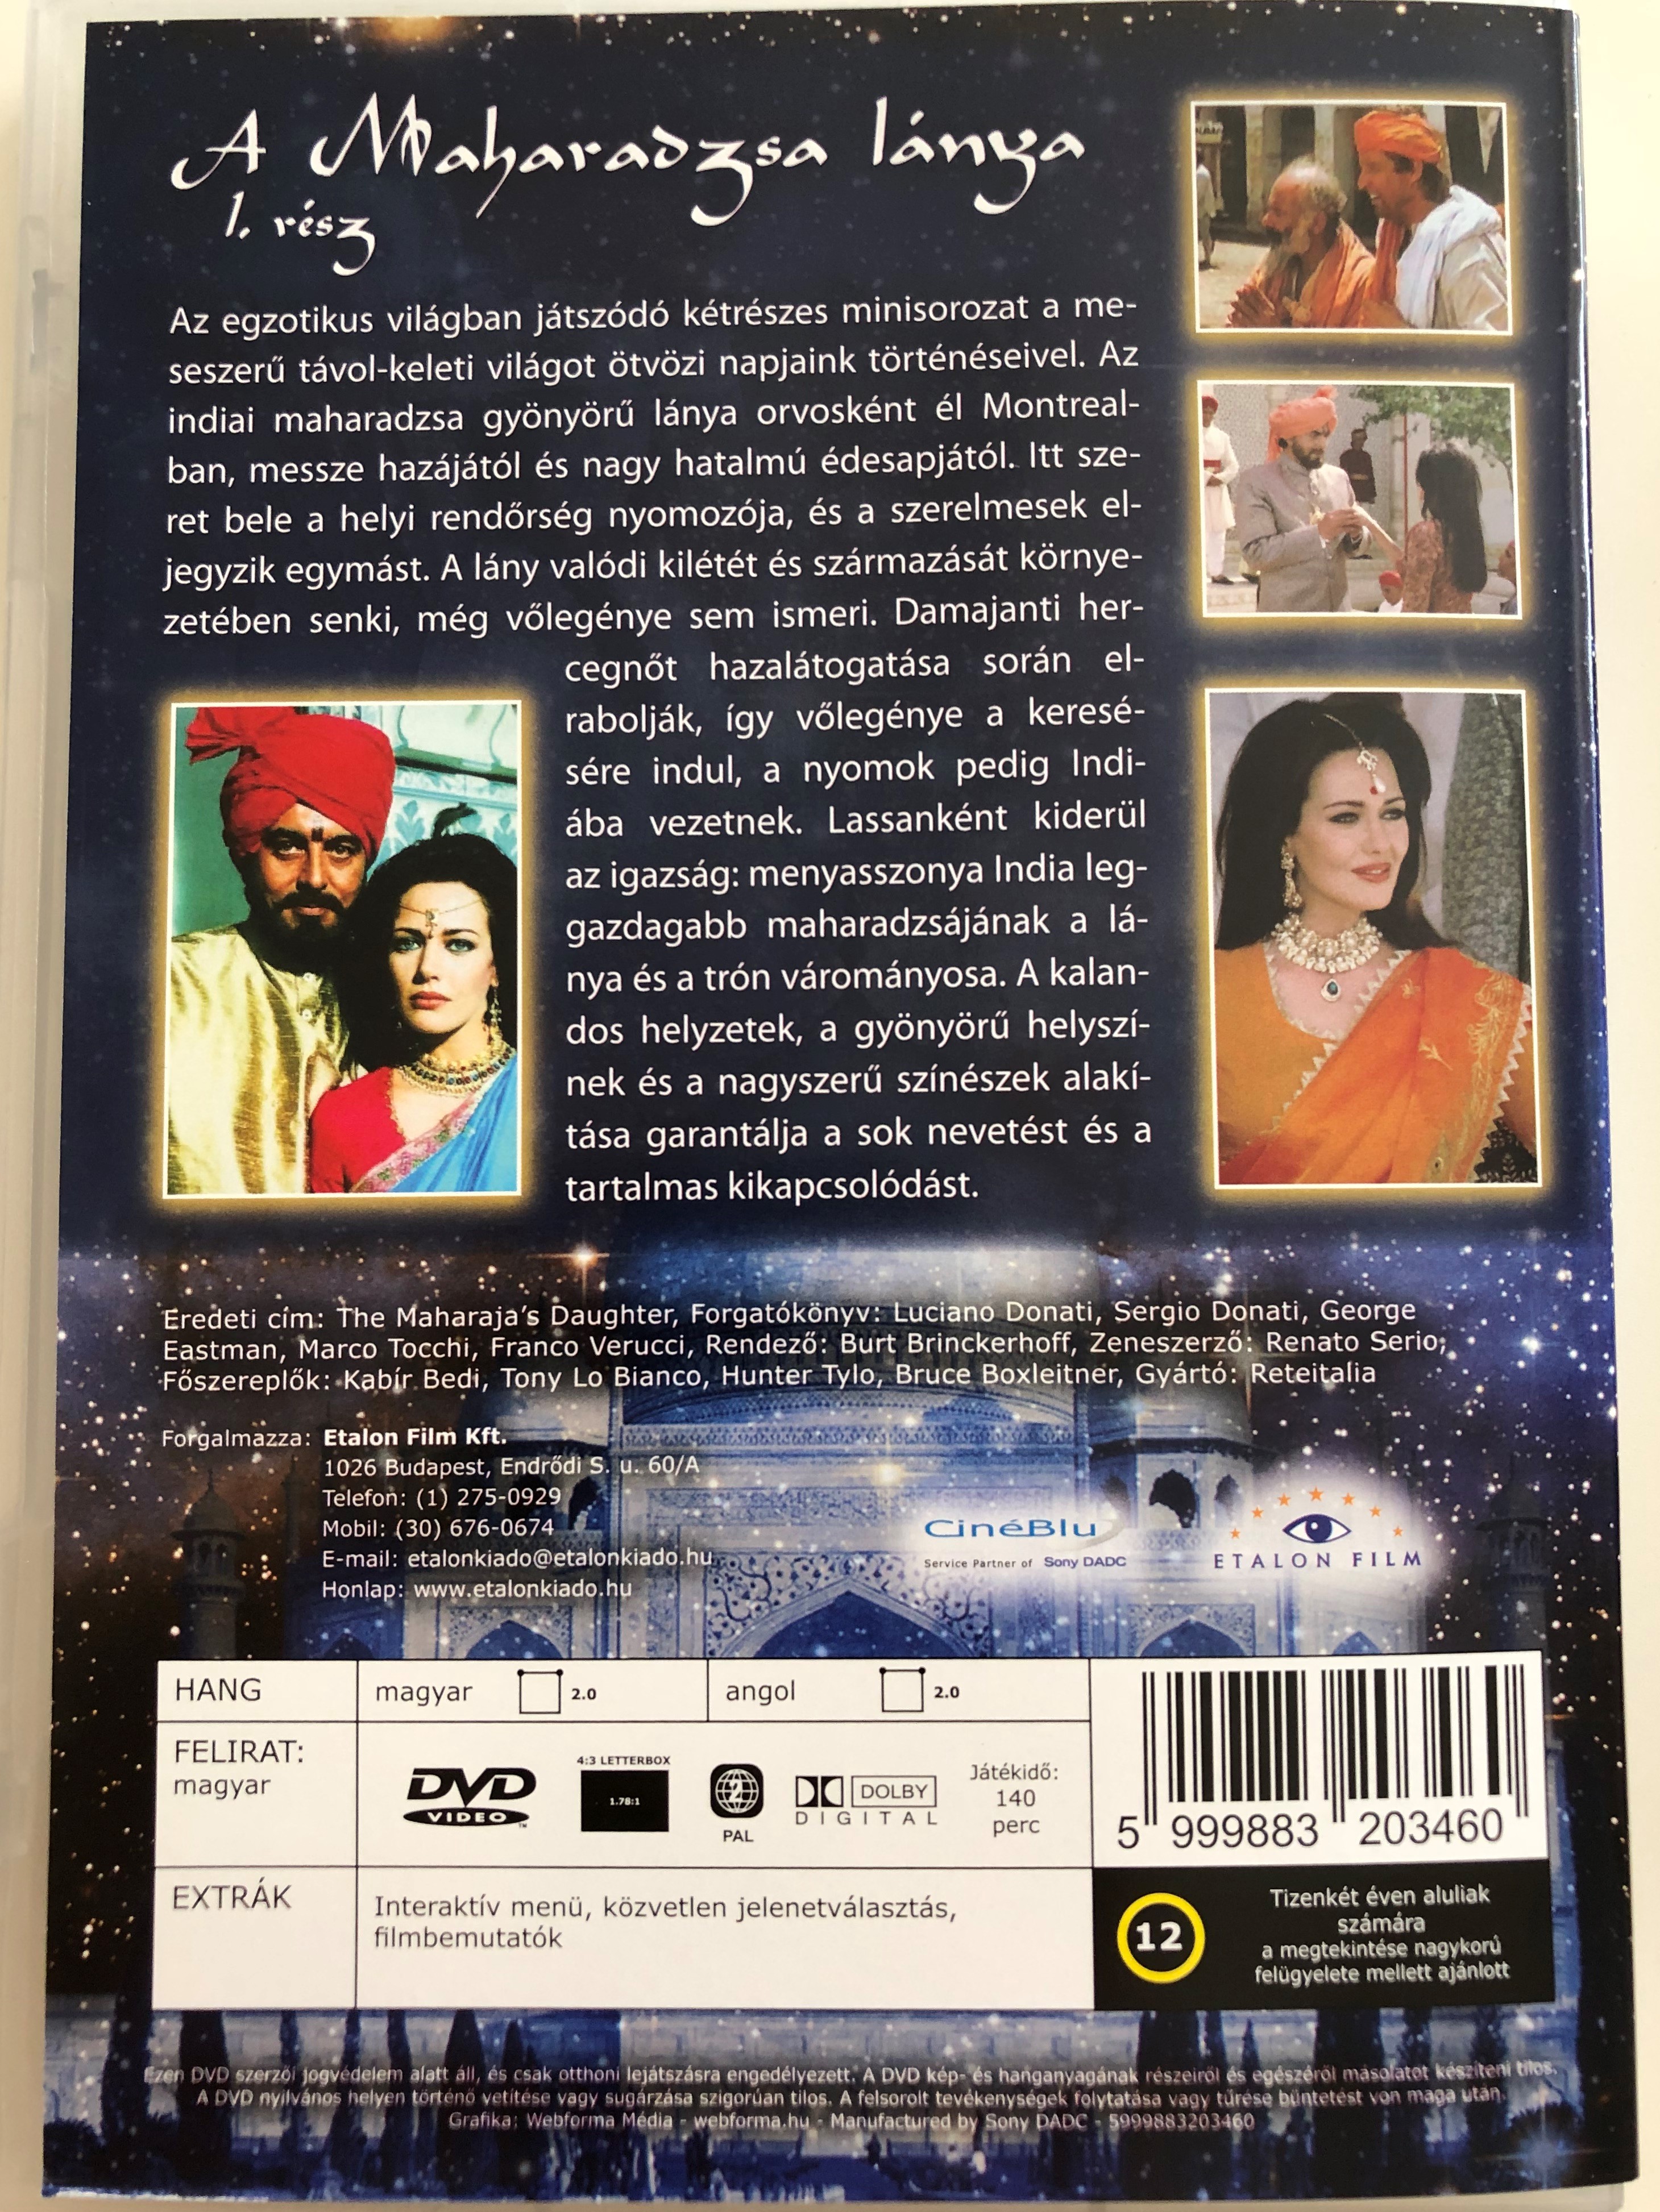 the-maharaja-s-daughter-1.-dvd-1994-a-maharadzsa-l-nya-1.-r-sz-directed-by-burt-brinckerhoff-starring-kabir-bedi-bruce-boxleitner-hunter-tylo-mini-series-2-.jpg